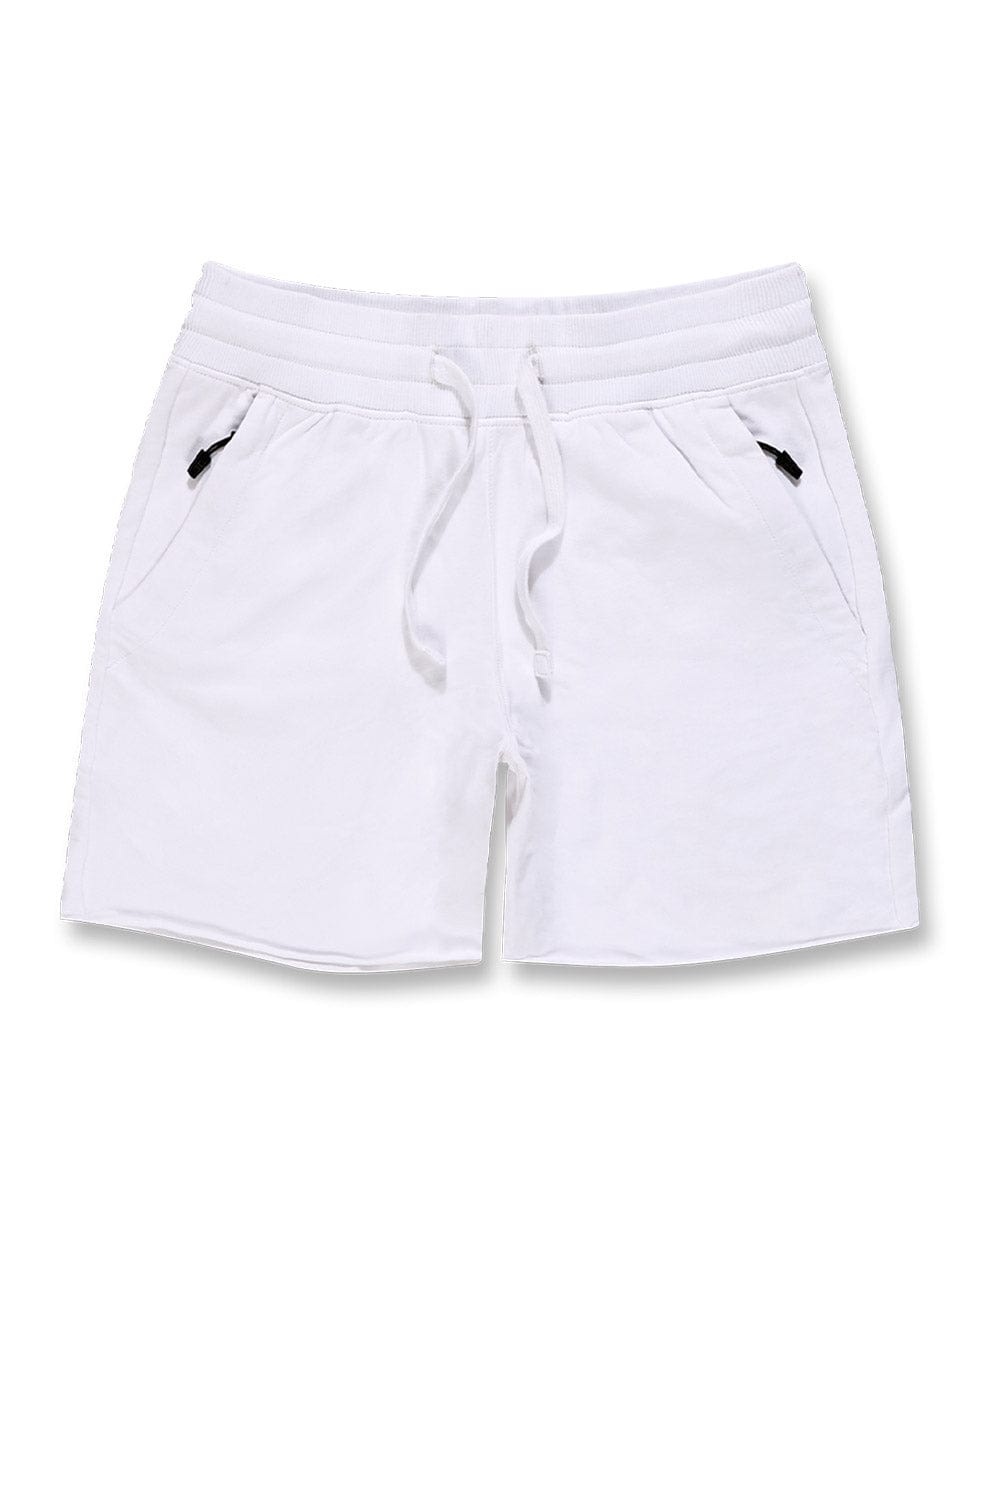 Jordan Craig Athletic - Summer Breeze Knit Shorts White / S